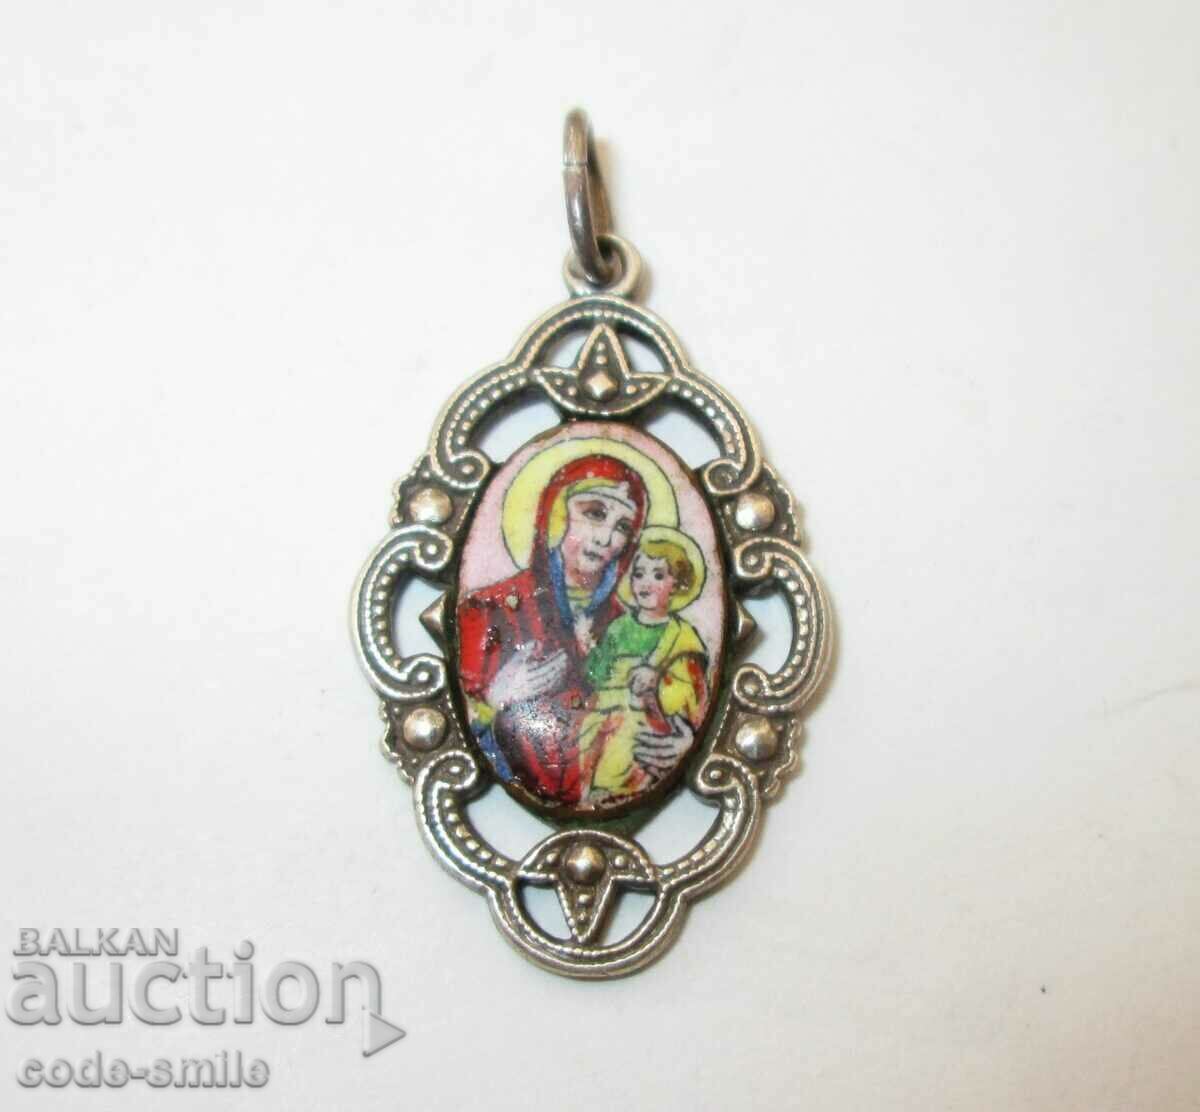 Old silver medallion pendant icon enamel Virgin Mary